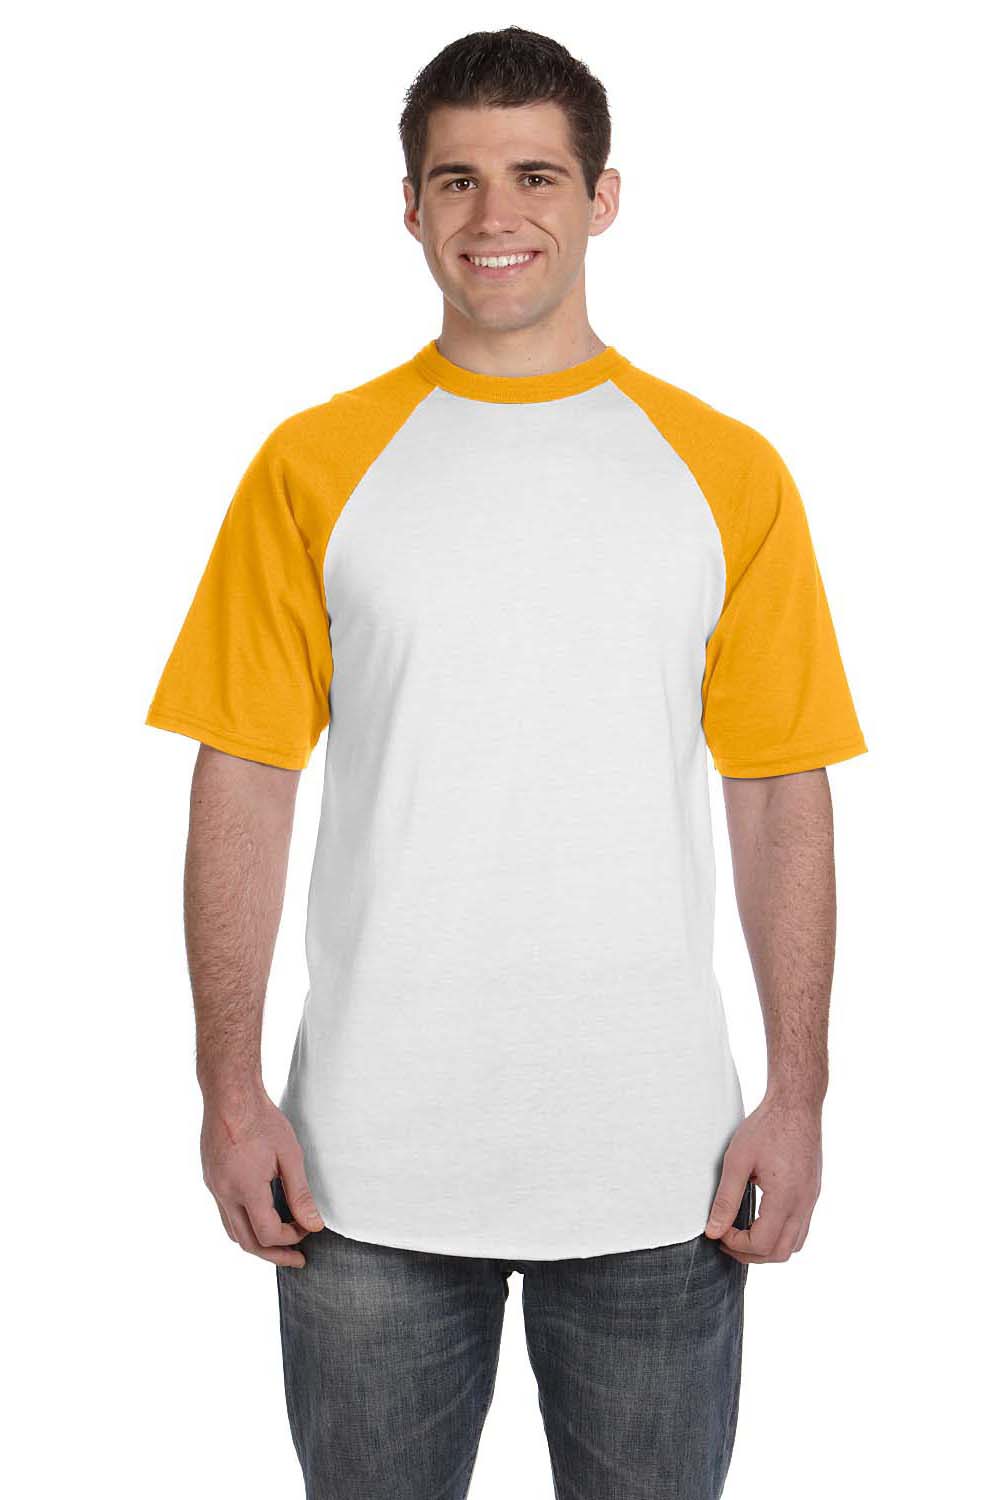 Augusta Sportswear 423 Mens Short Sleeve Crewneck T-Shirt White/Gold Model Front